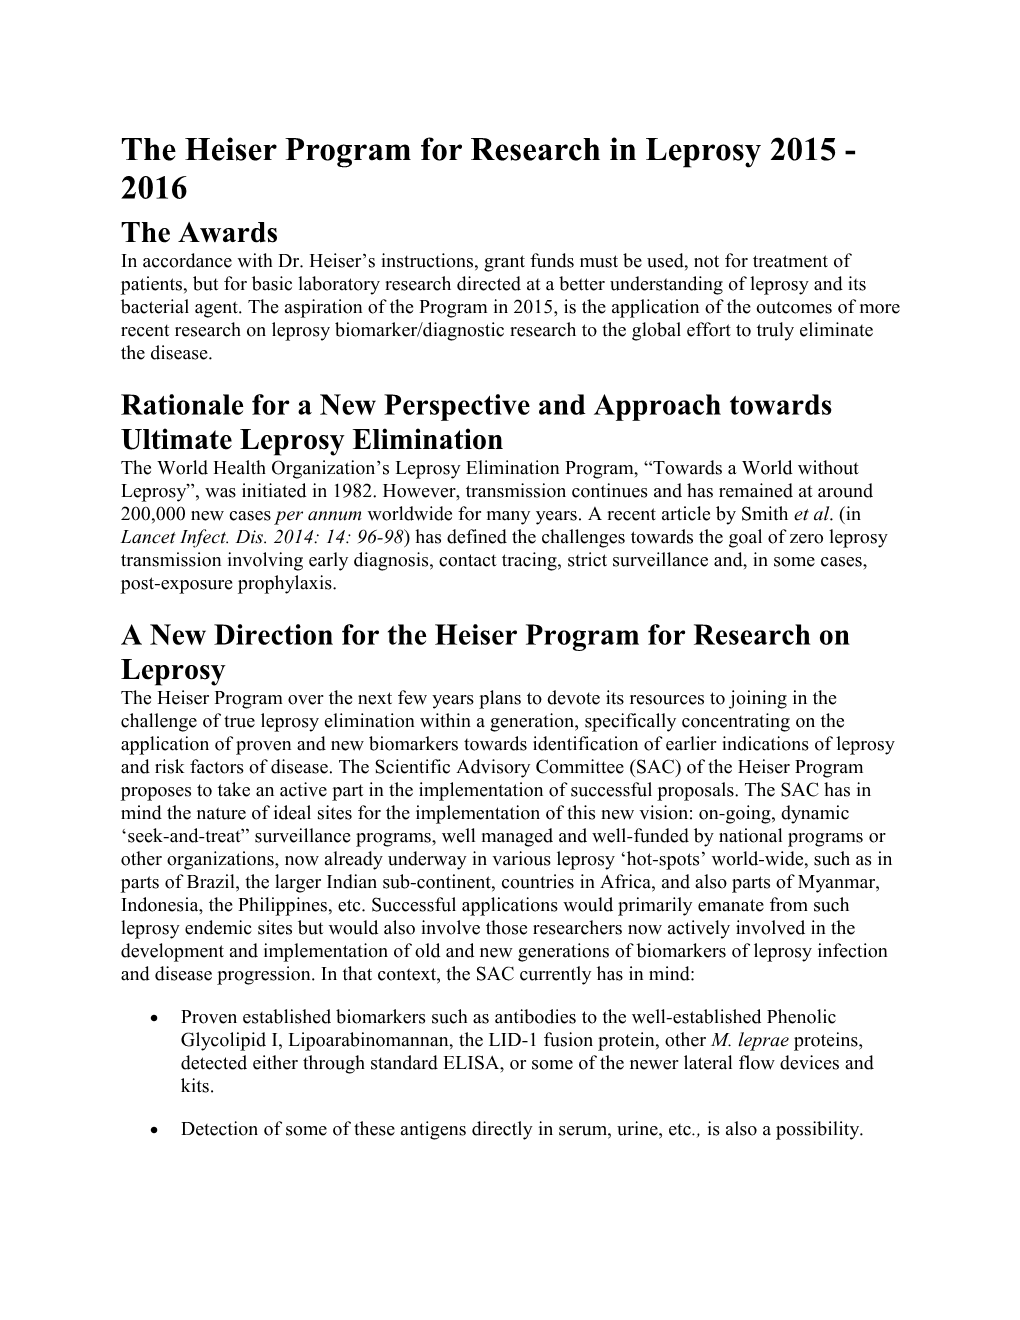 The Heiser Program for Research in Leprosy 2015- 2016